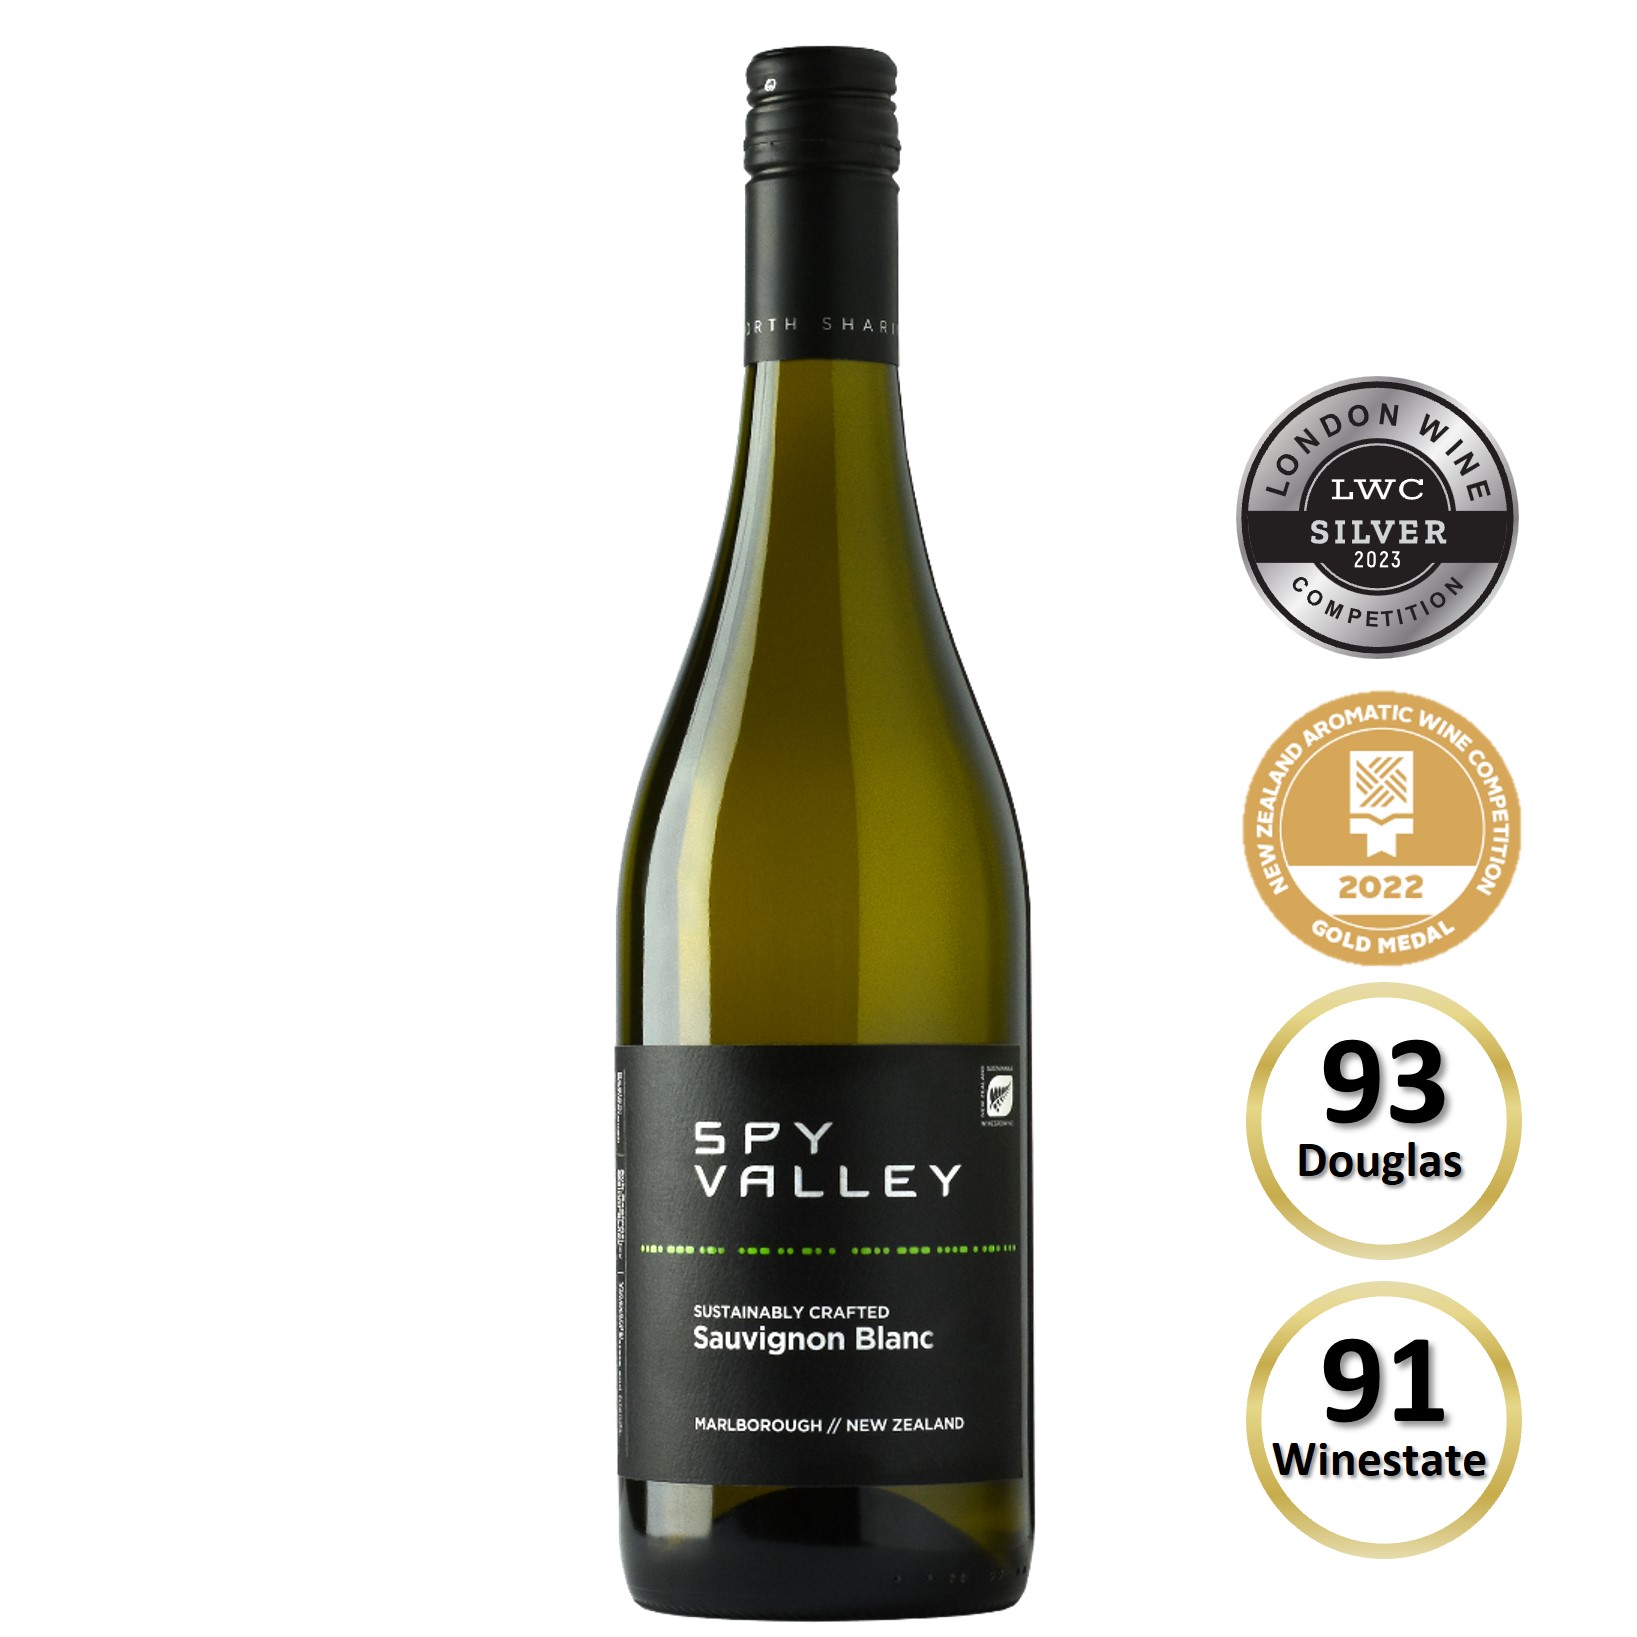 Spy Valley Sauvignon Blanc 2022 Neuseeland - Weinboutique